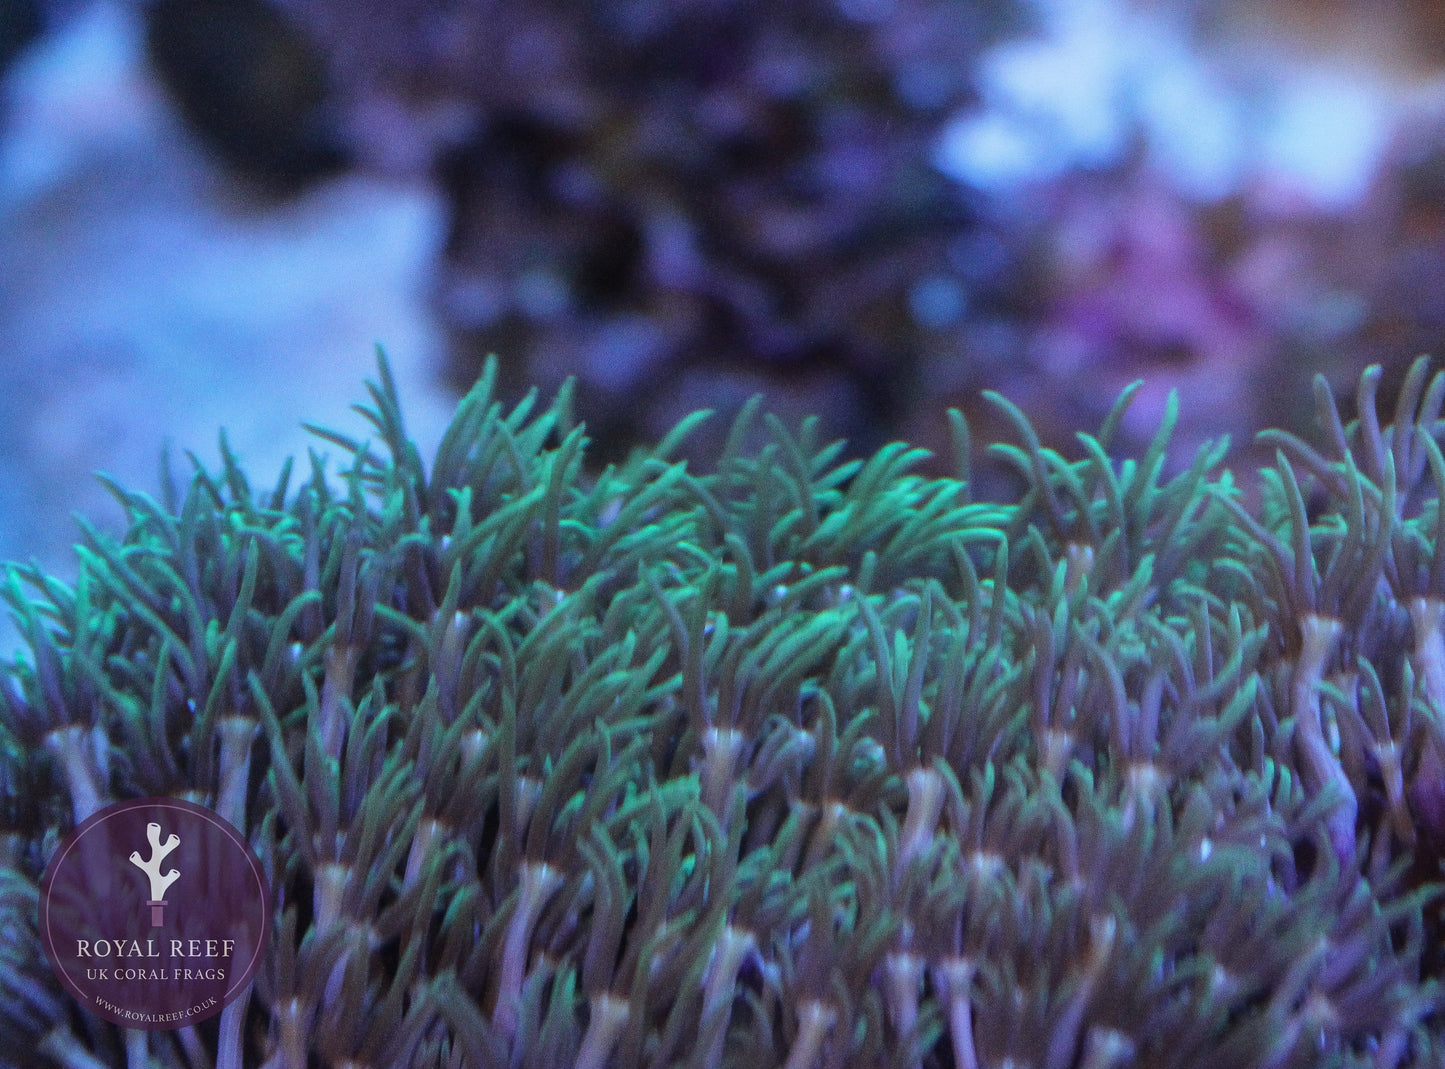 Mint Green Star Polyp - Royal Reef